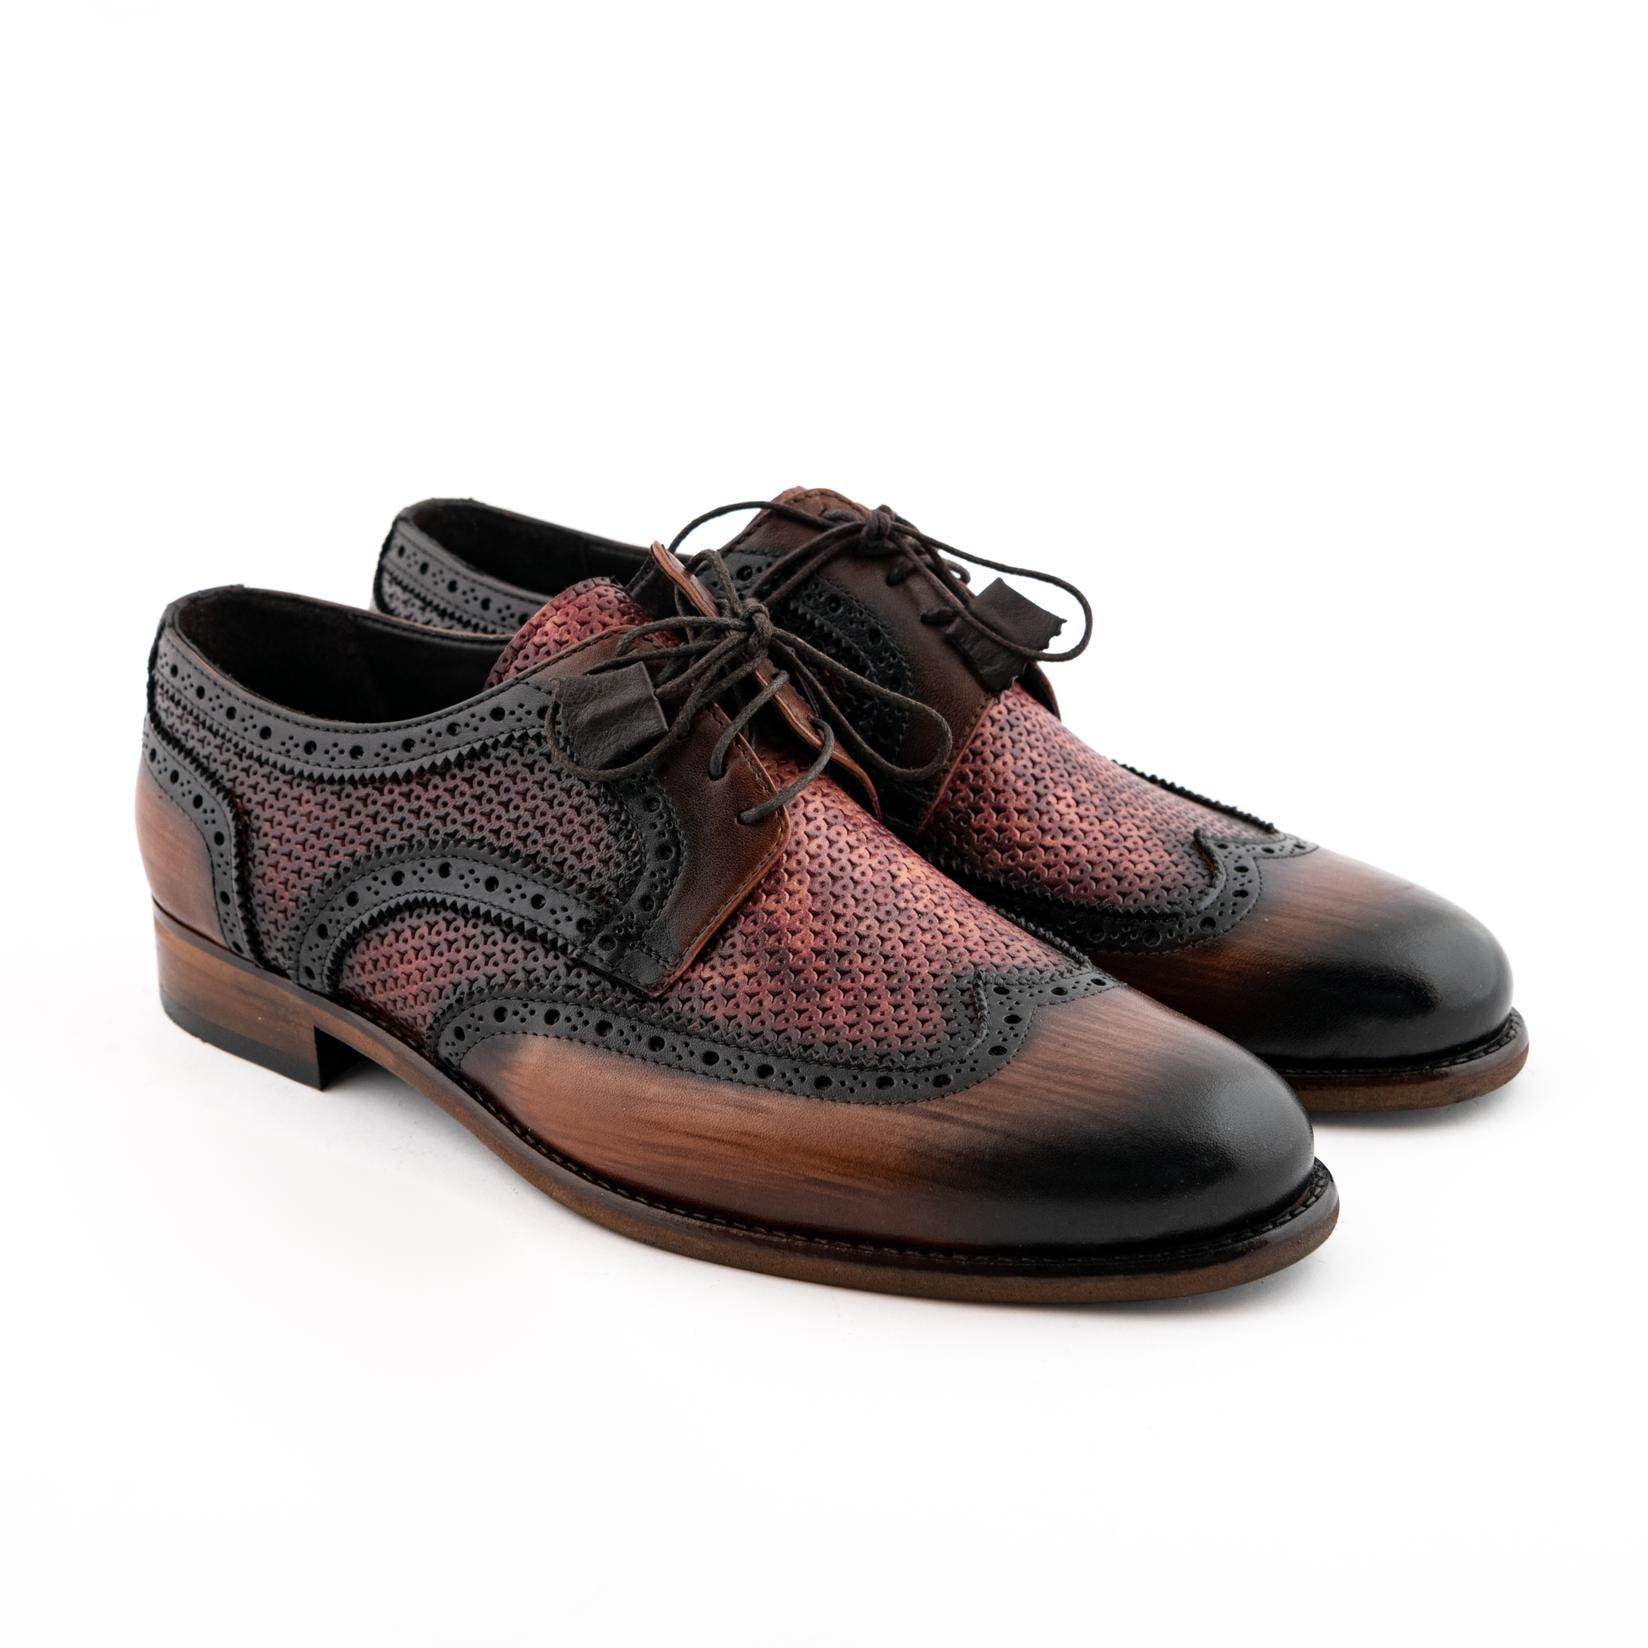 Selected image for SANTOS&SANTORINI Muške cipele Frederico braon